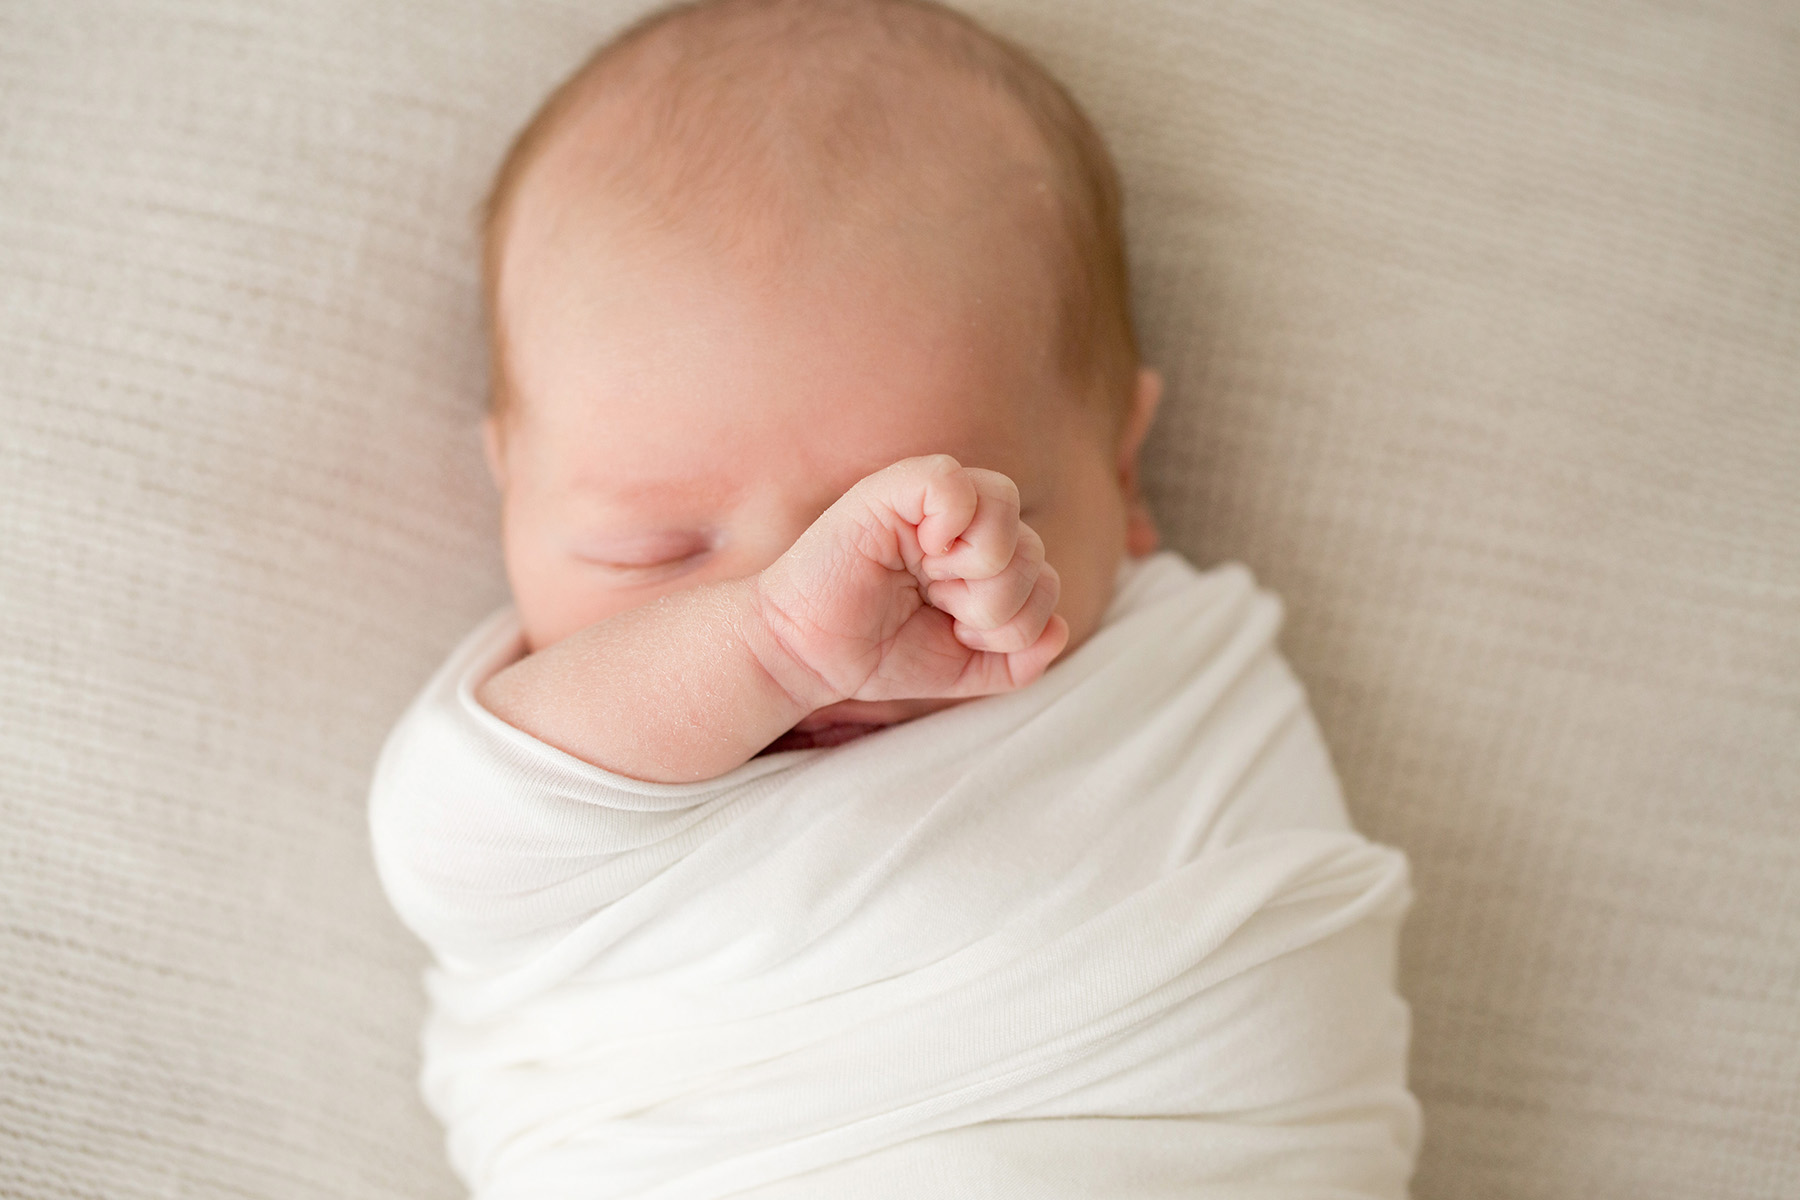 Louisville ky newborn photographer | Julie Brock Photography | Matenrity Photographer | Funny baby photo of baby with hand over face.jpg